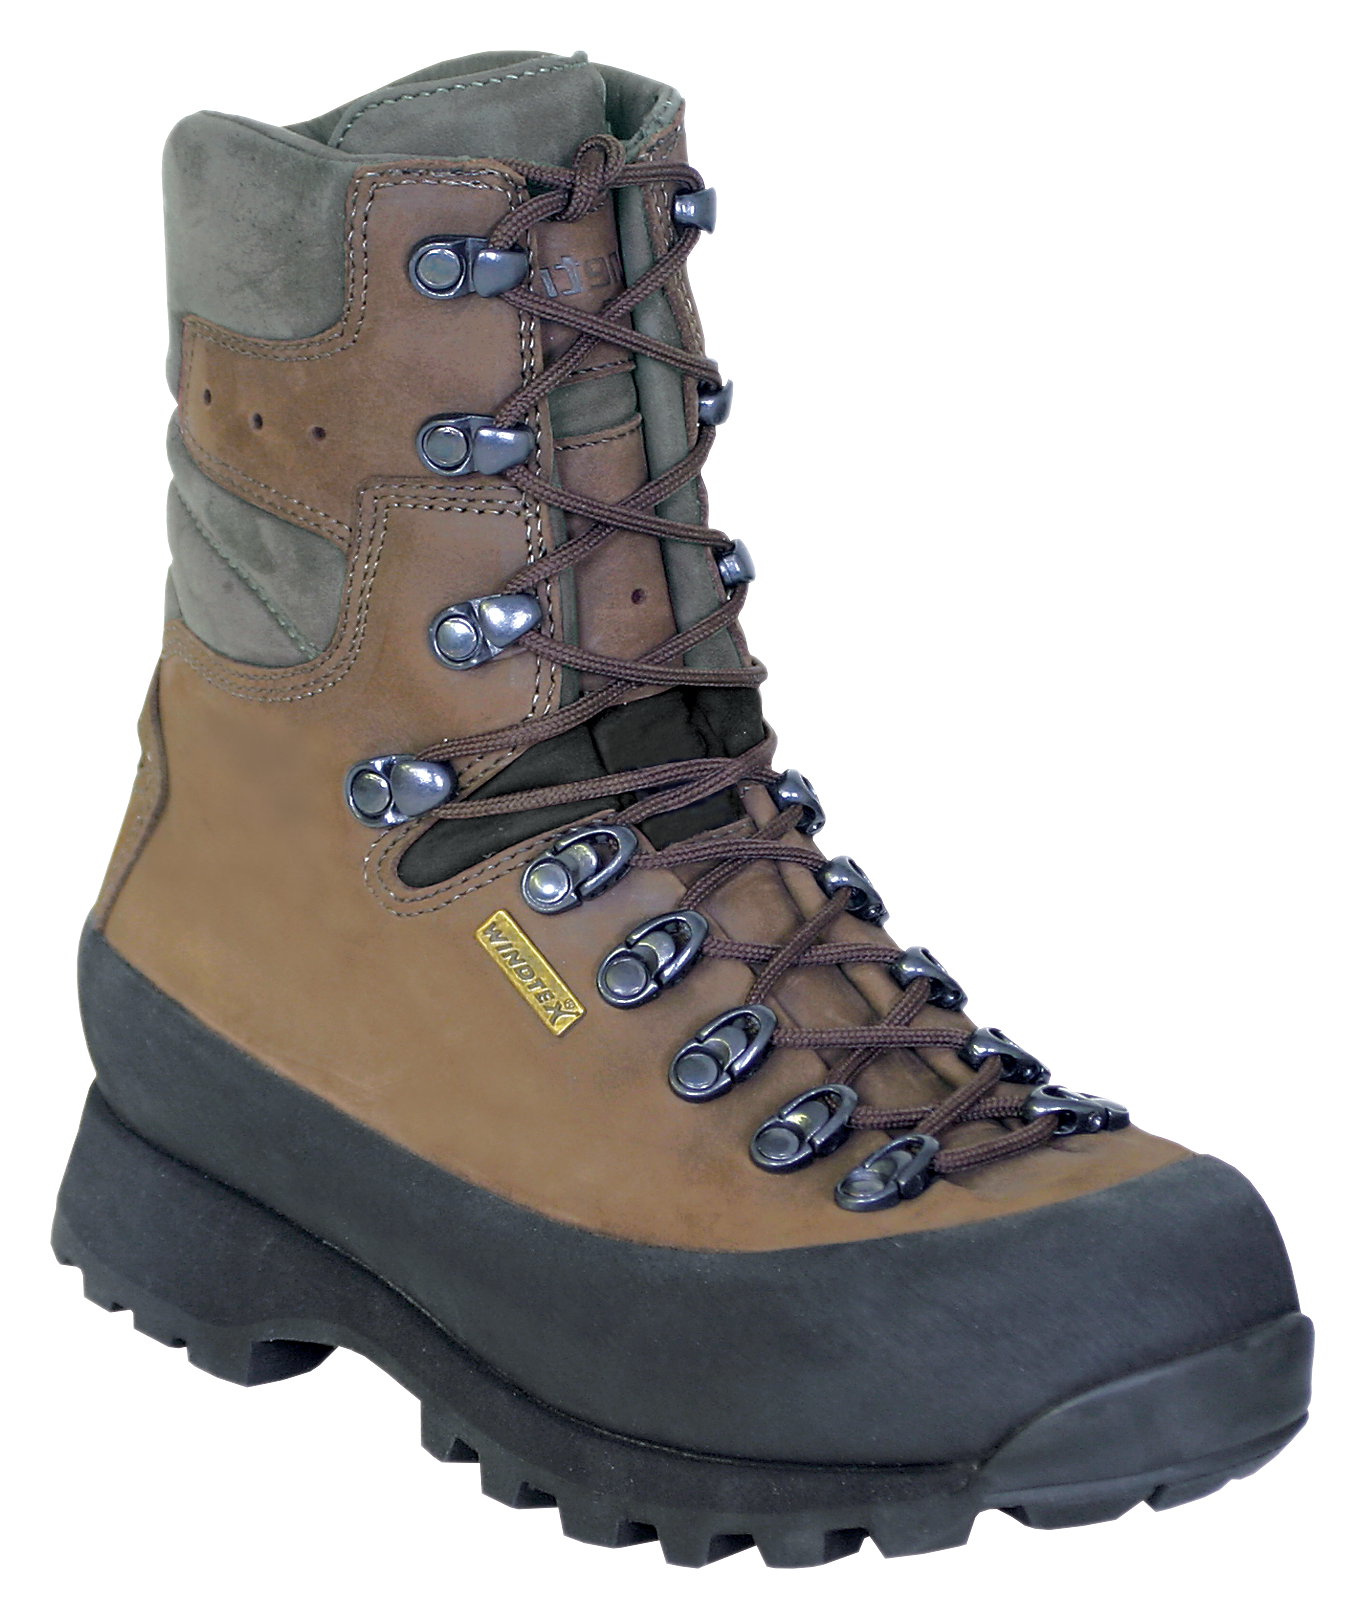 Kenetrek Mountain Extreme Waterproof Hunting Boots for Ladies -   6.5M